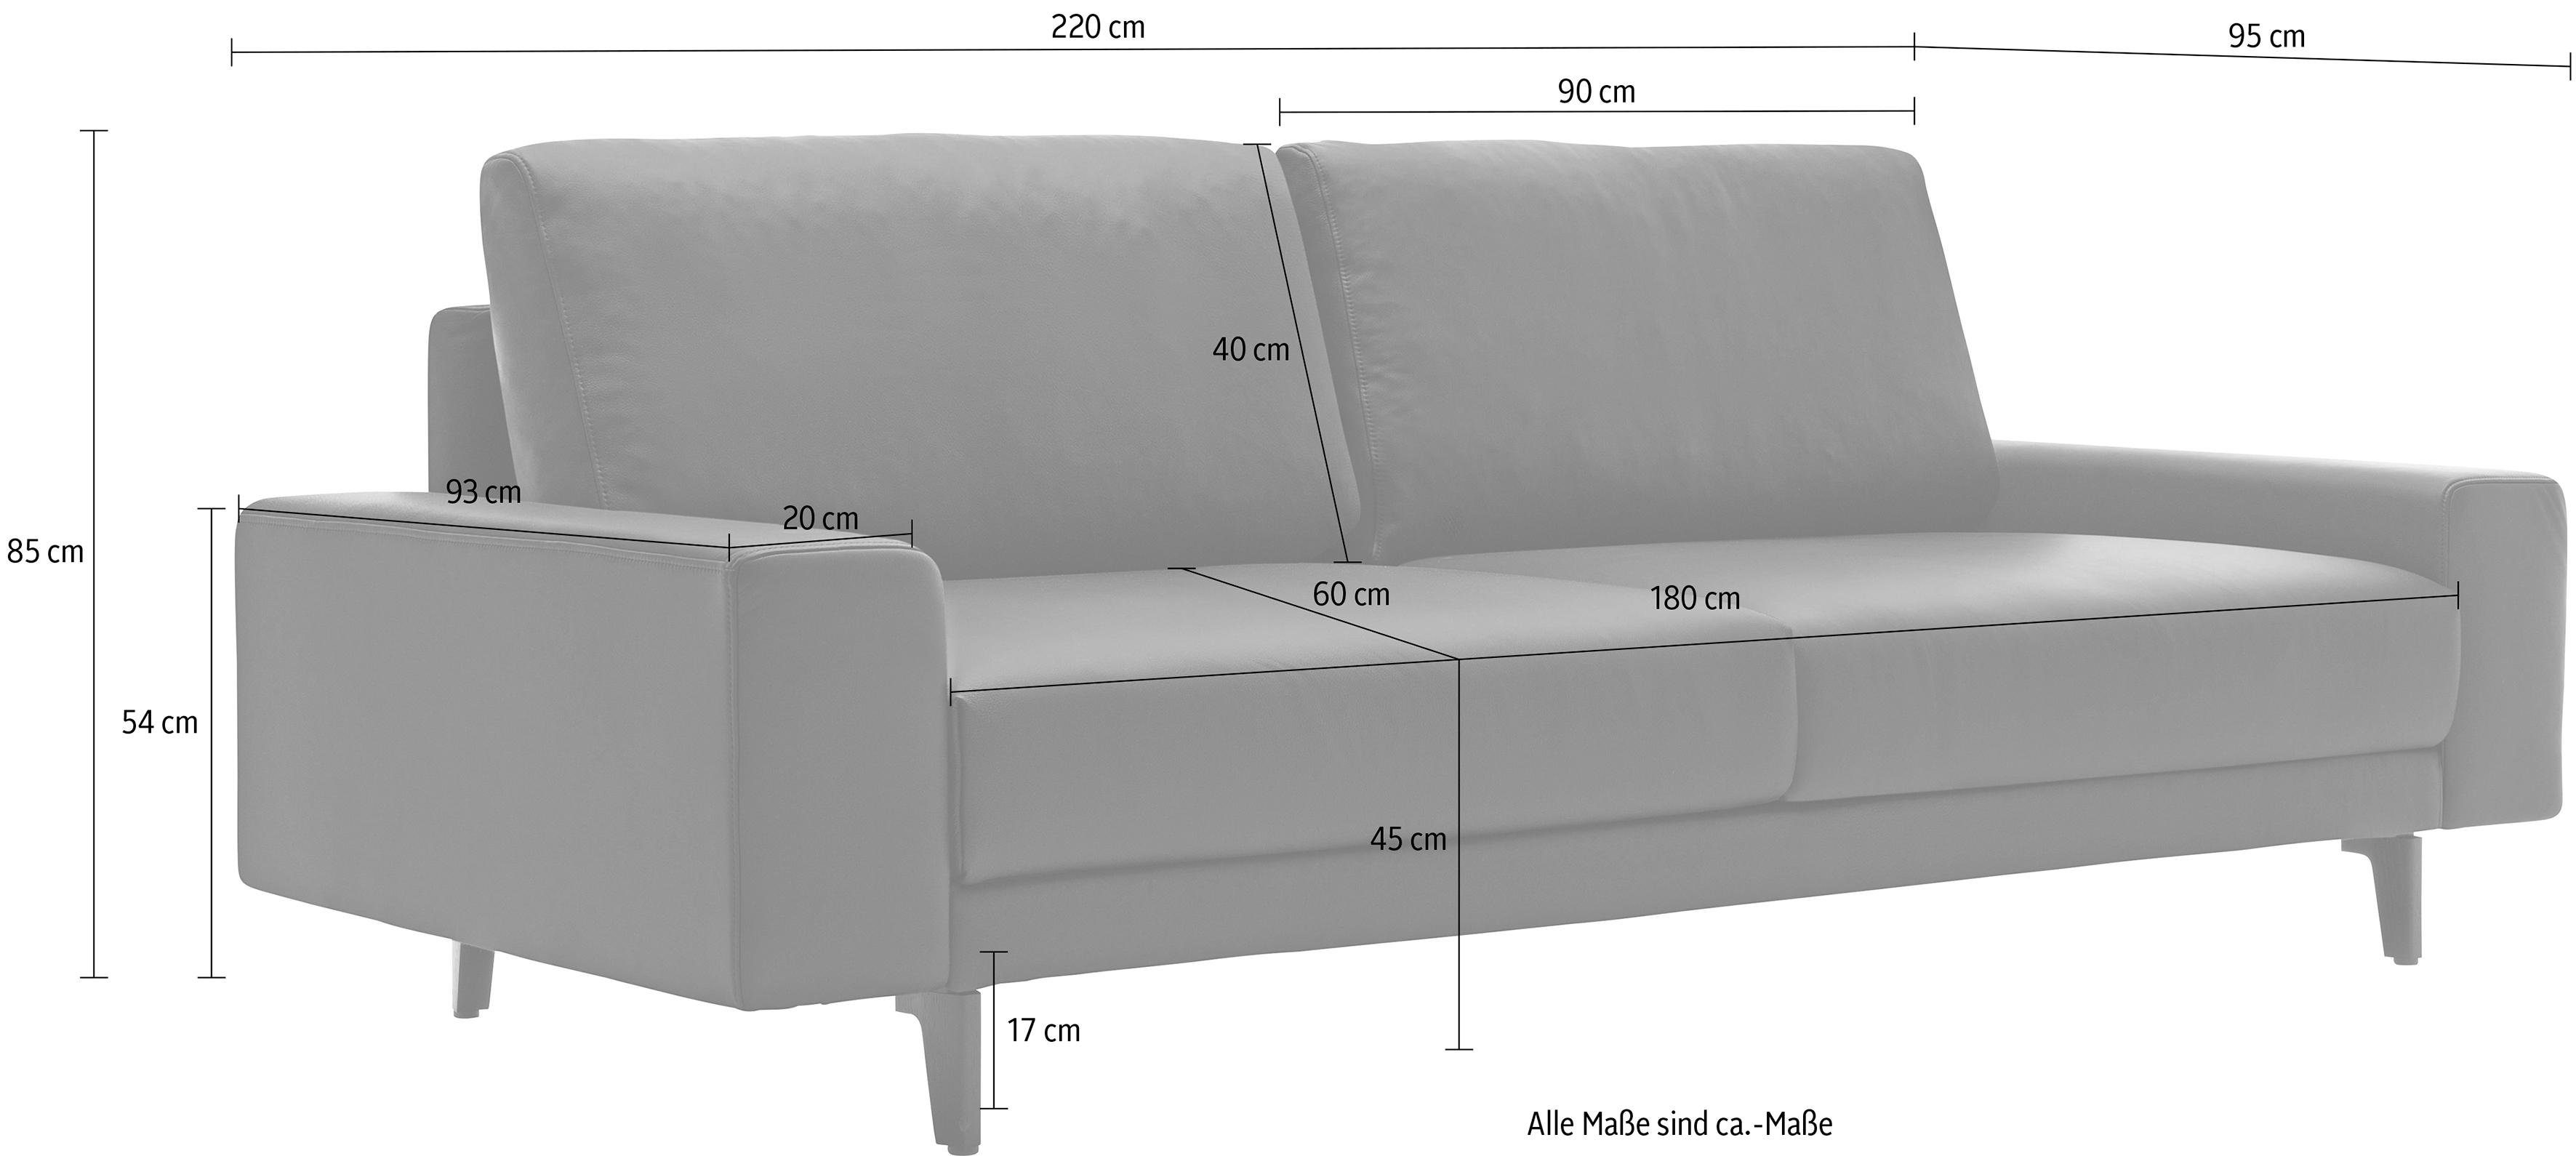 hülsta sofa 3-Sitzer 220 breit niedrig, cm hs.450, in Breite umbragrau, Armlehne Alugussfüße